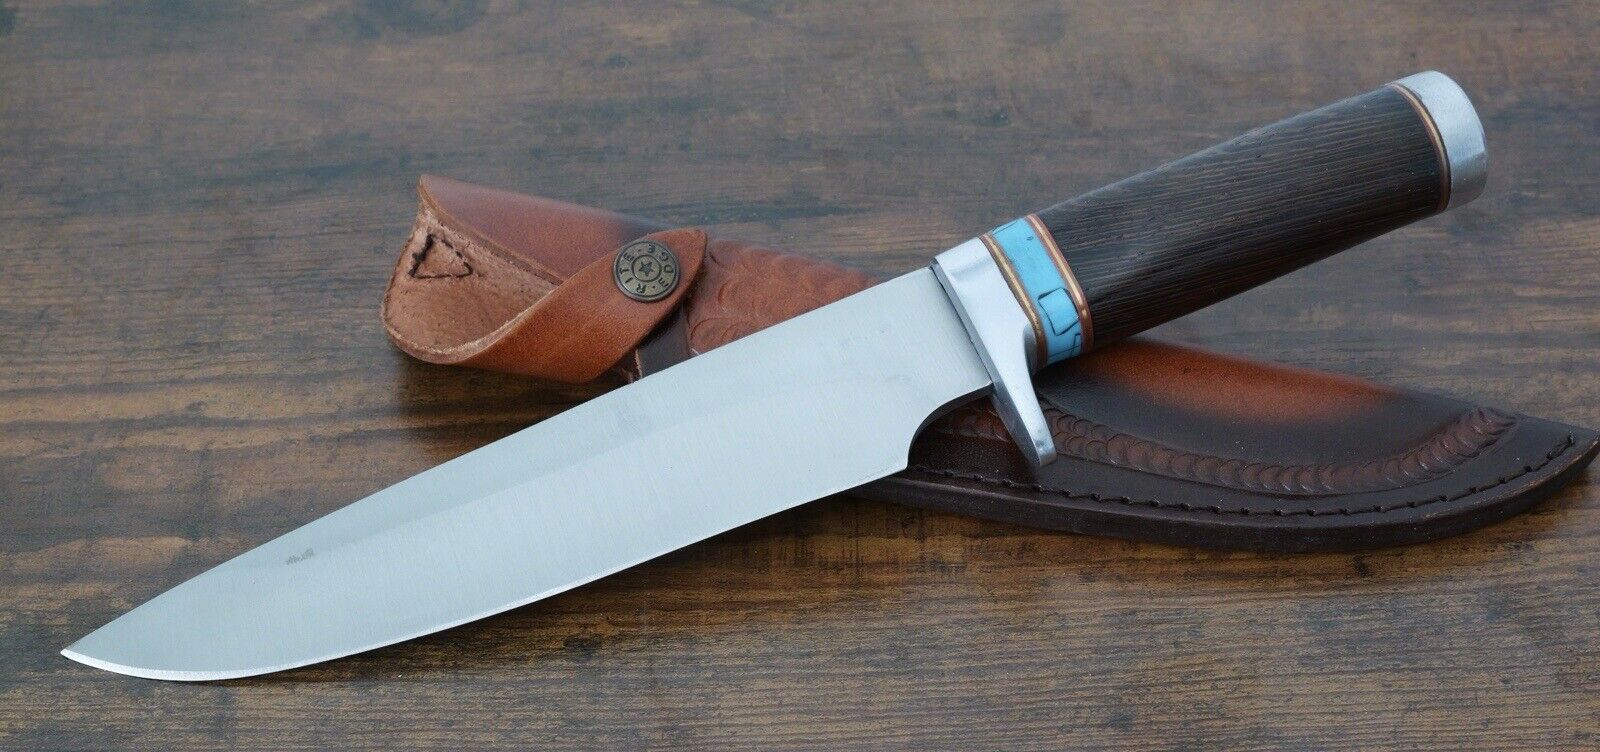 13” Fixed Blade Bowie Knife Large Wood Handle Embossed Leather Sheath Belt Loop